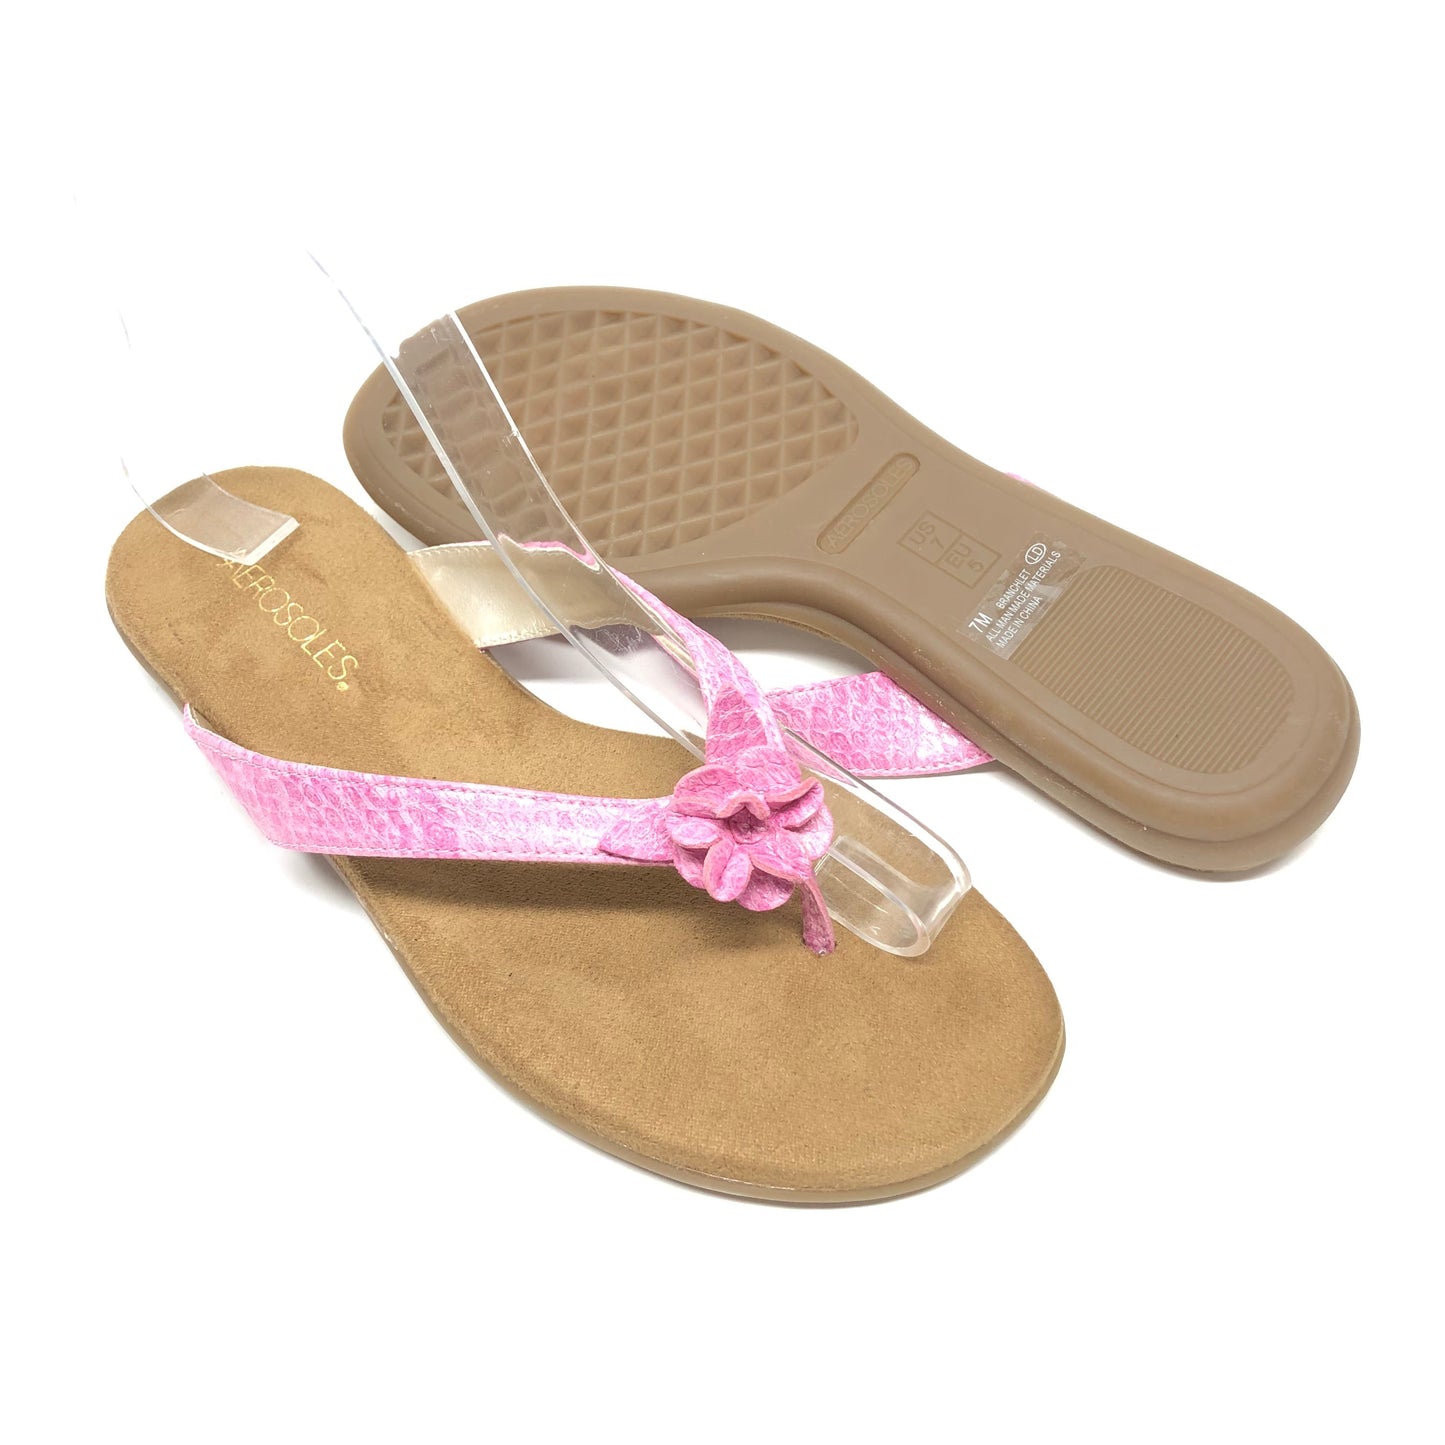 Sandals Flip Flops By Aerosoles  Size: 7